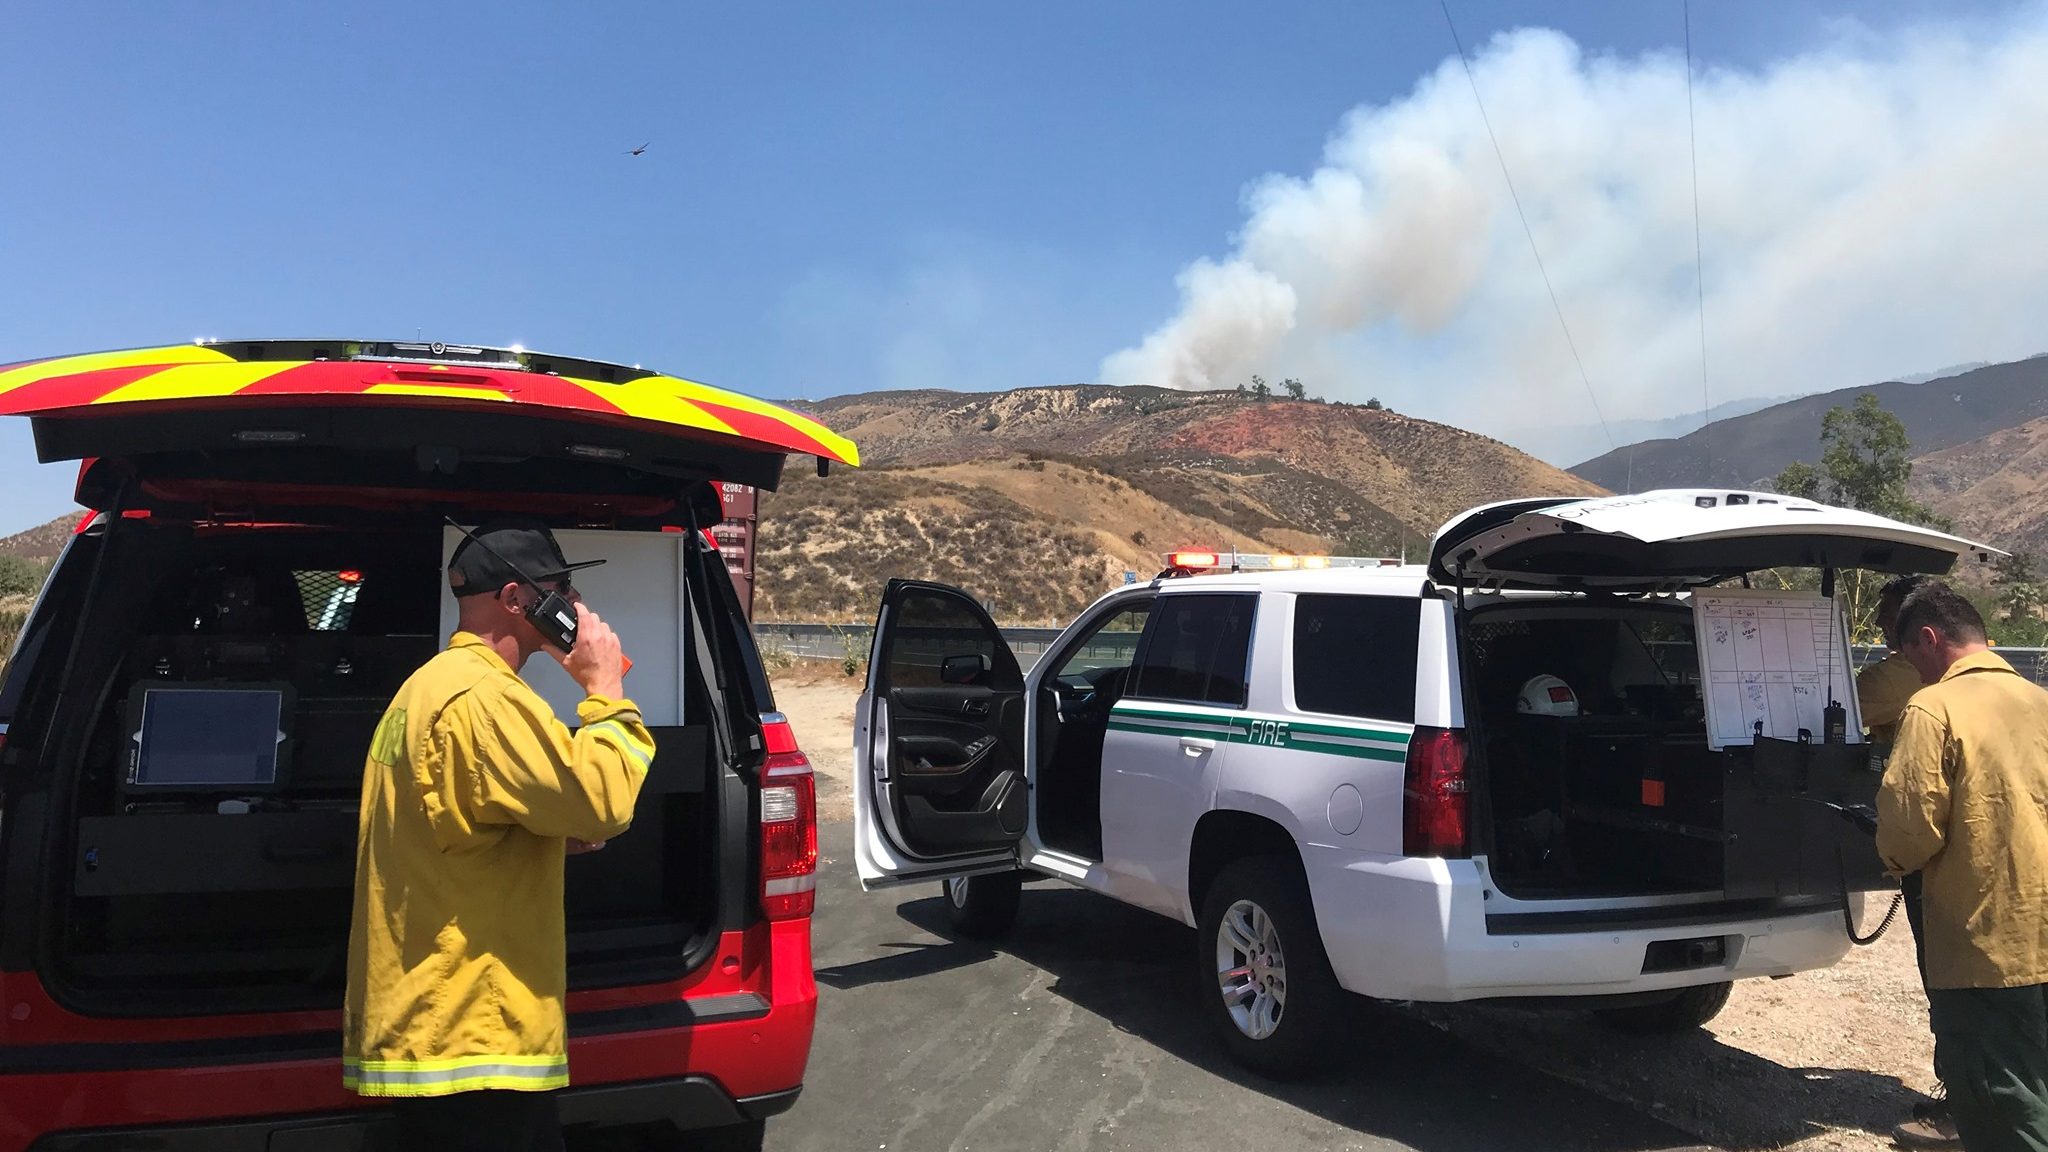 Peak Fire's rapid spread near San Bernardino prompts Highway 18 closure; firefighter injured.